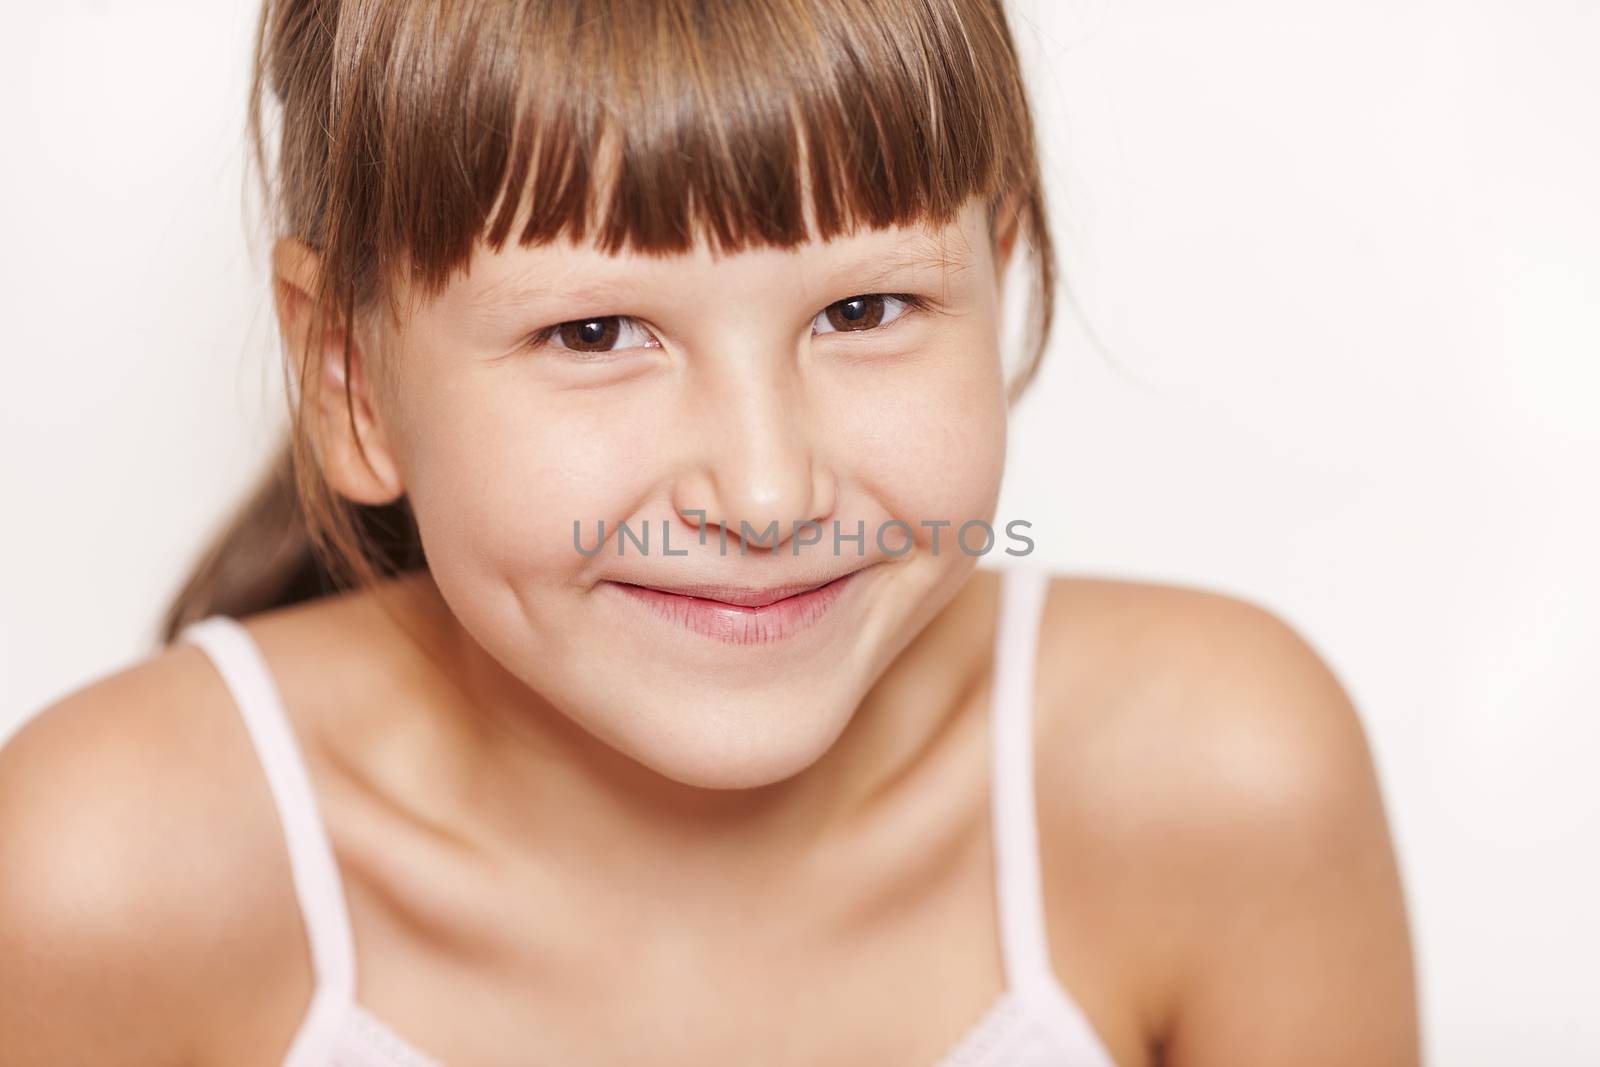 Happy Eight years girl wearing bangs closeup portrait